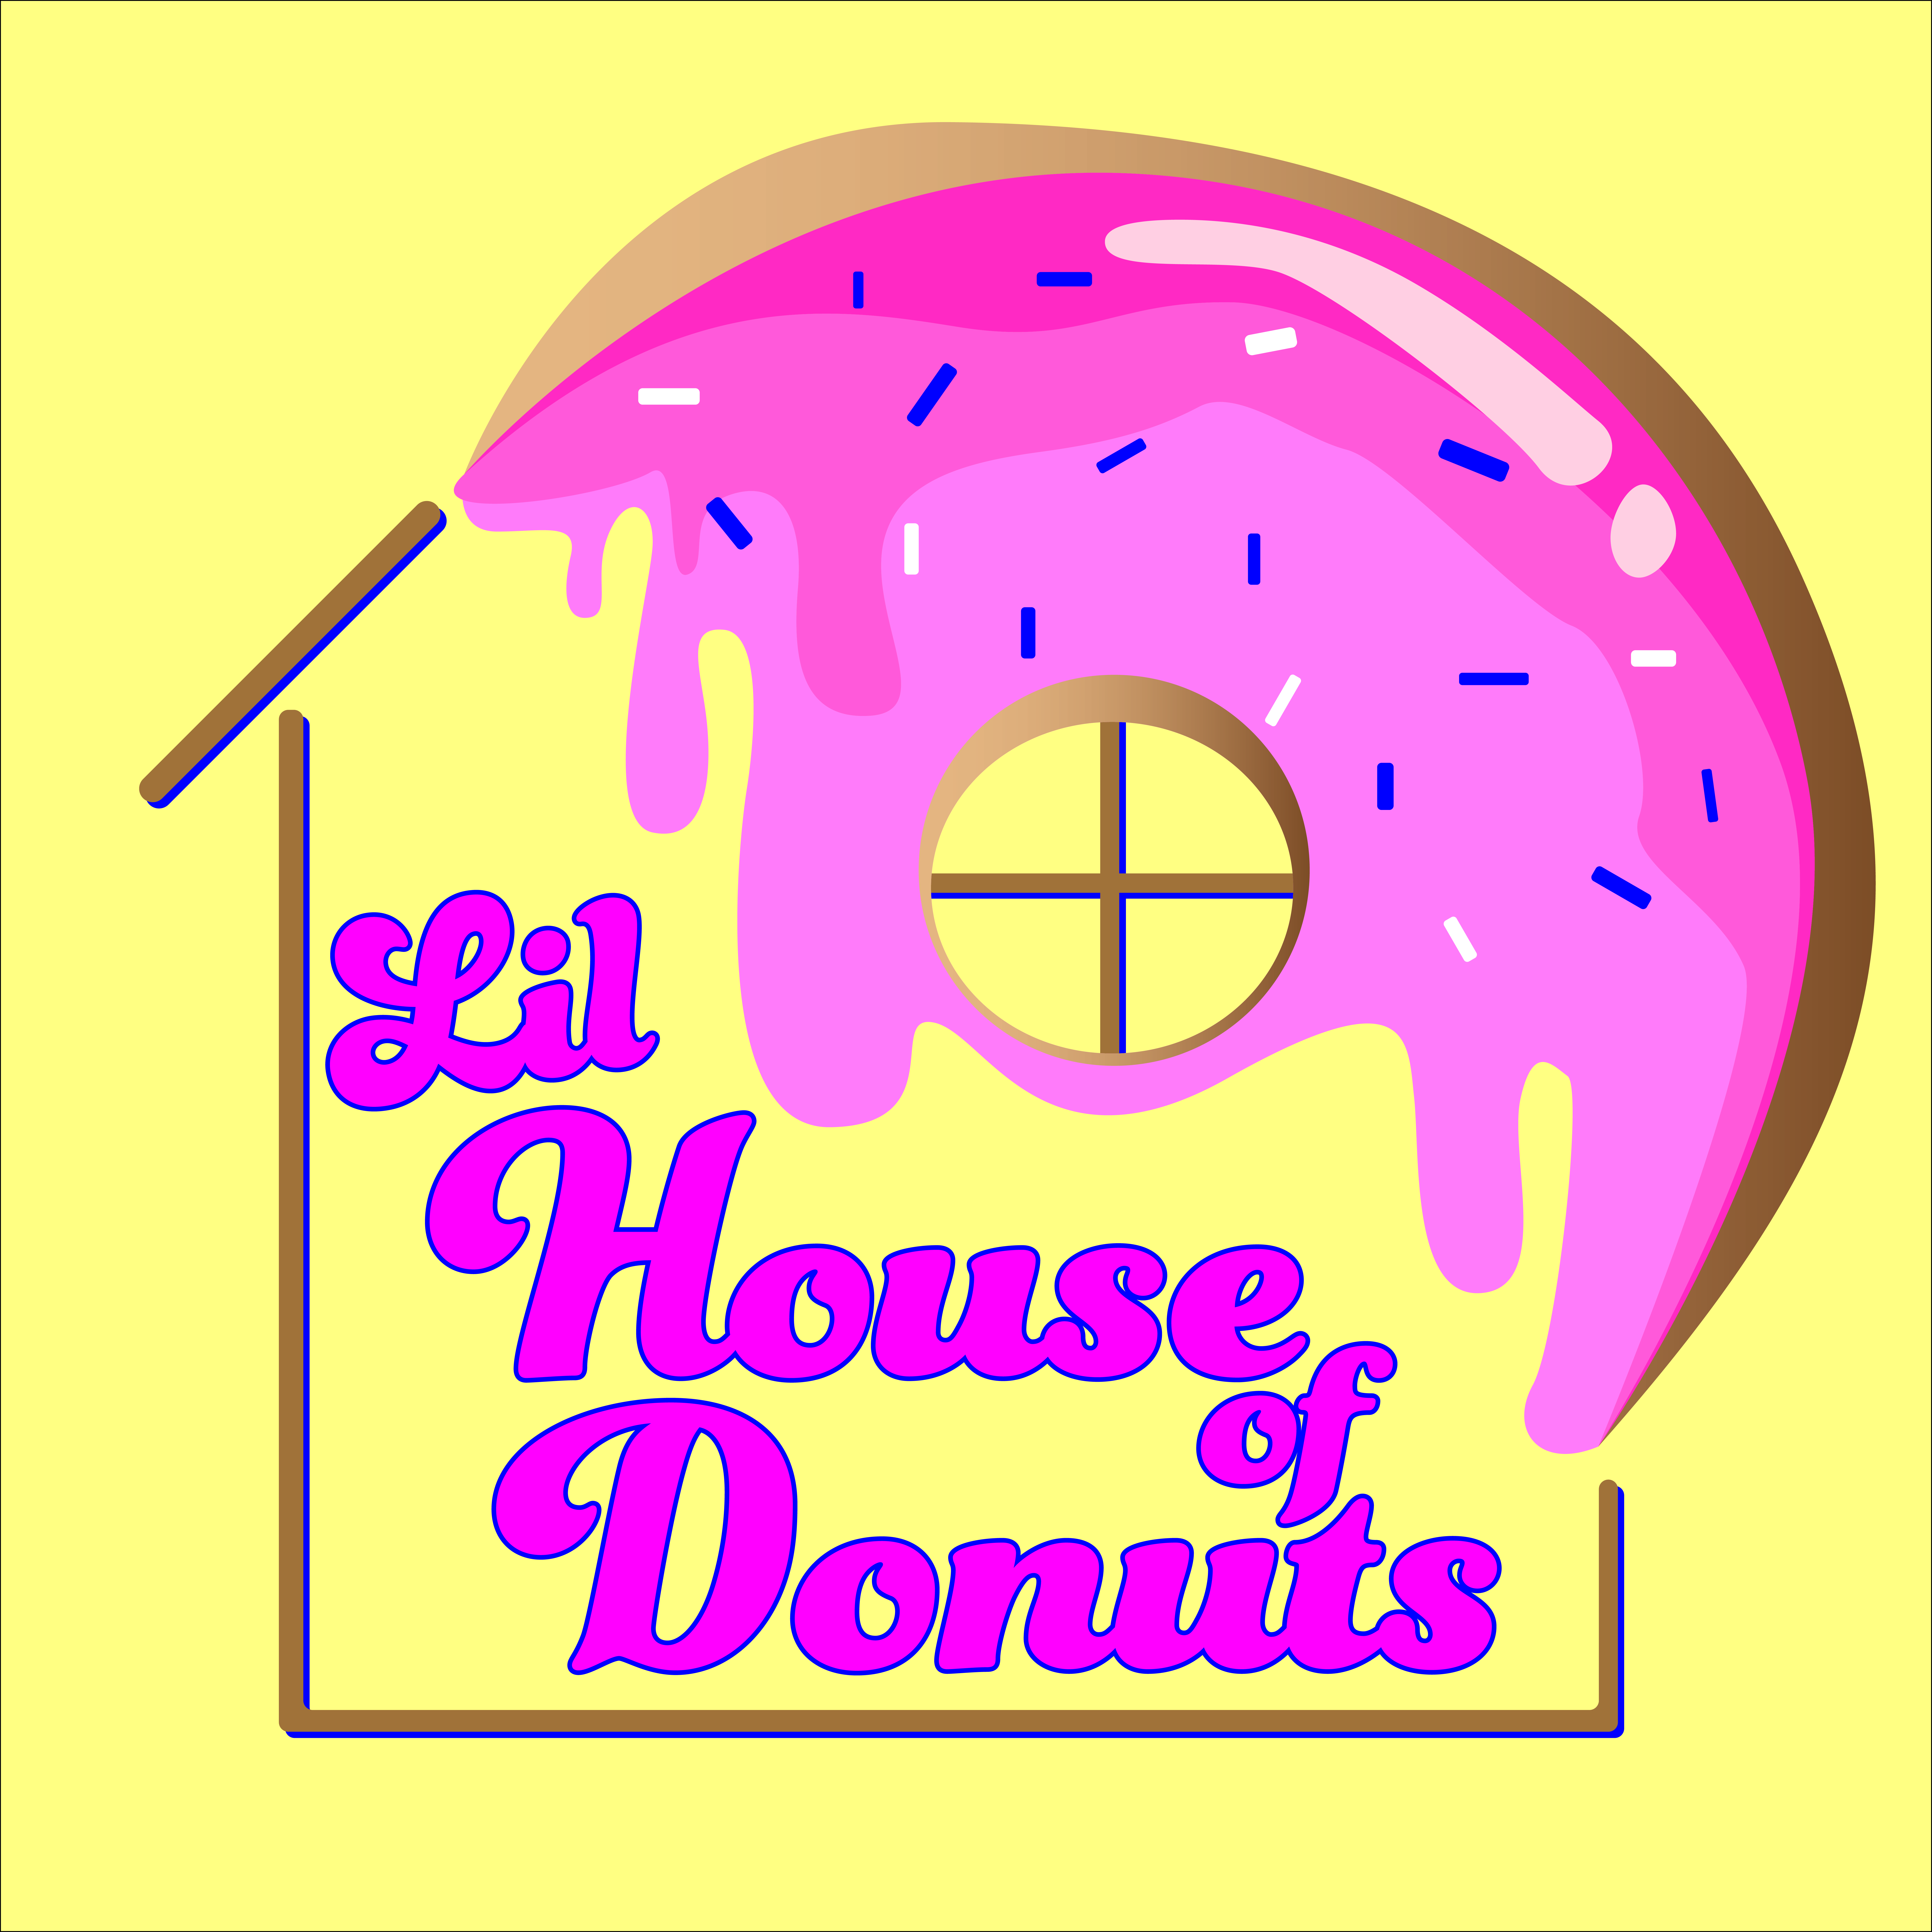 new version of donut logo by Rochell Hatfield